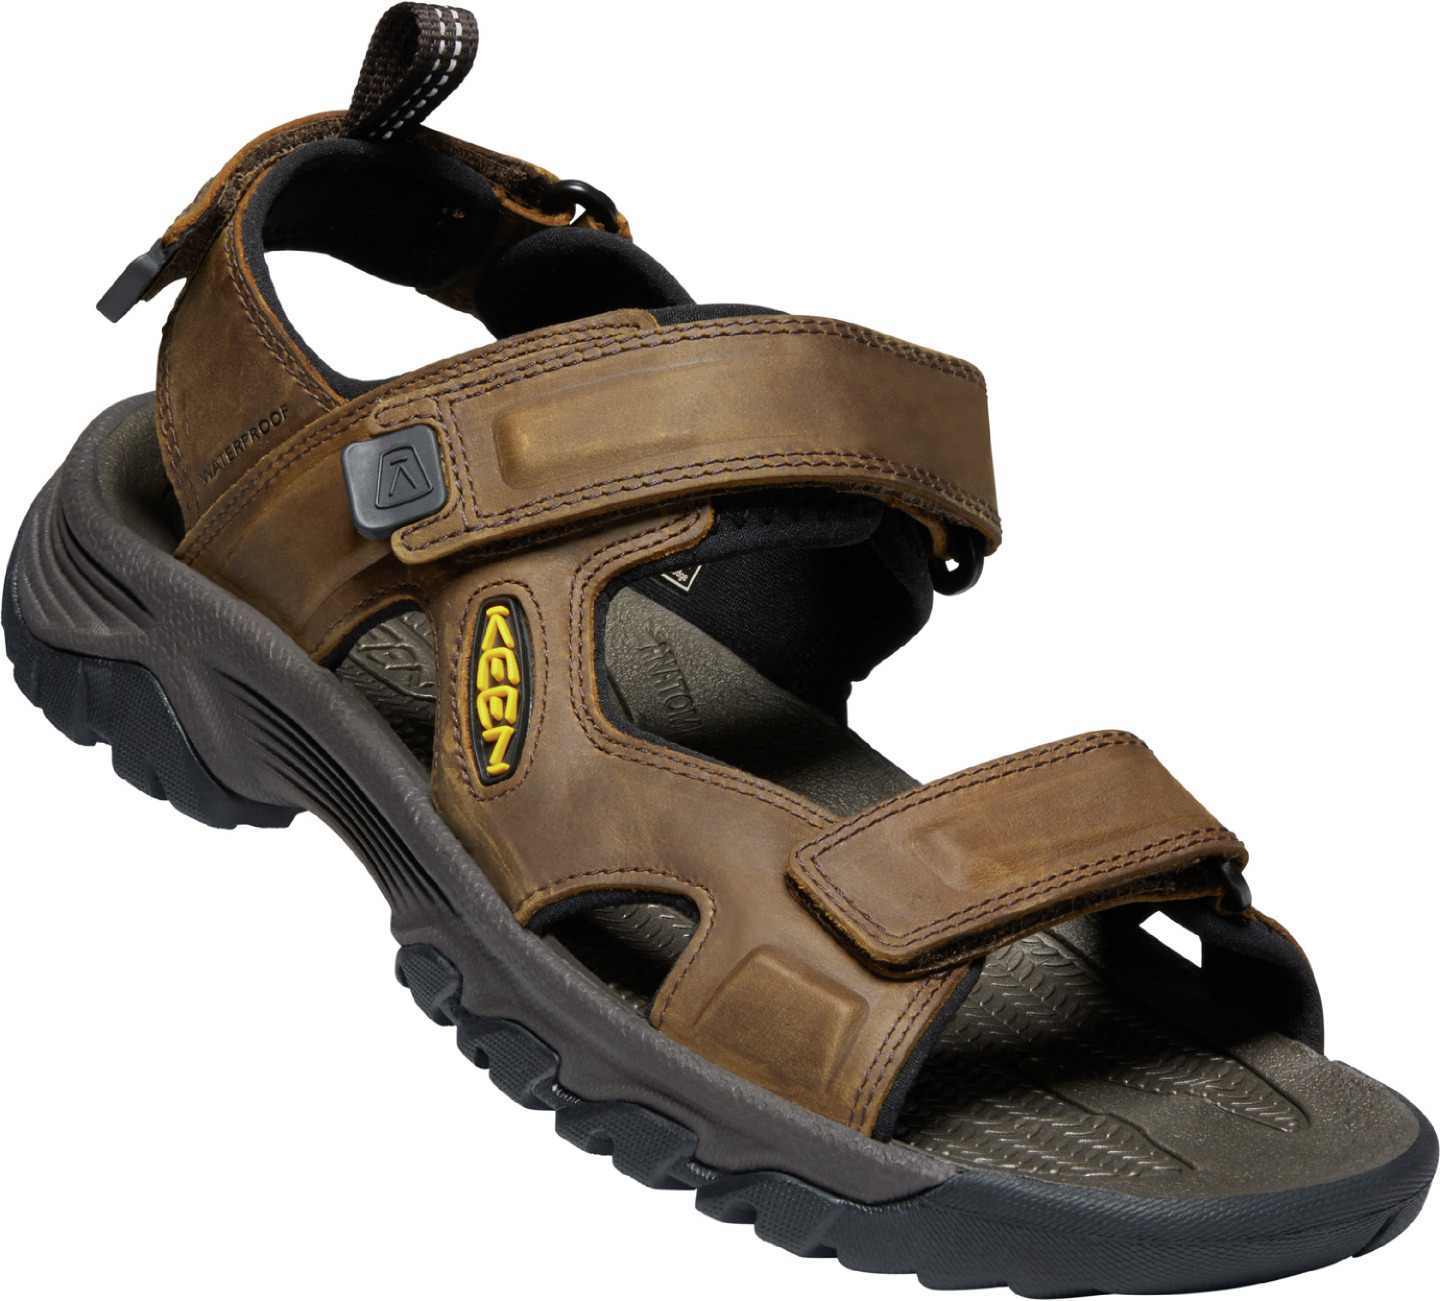 Keen pánské sandály Targhee III Open Toe Sandal Men - Bison/Mulch Barva: bison/mulch, Velikost: 8 UK (42 EU / 27 cm)